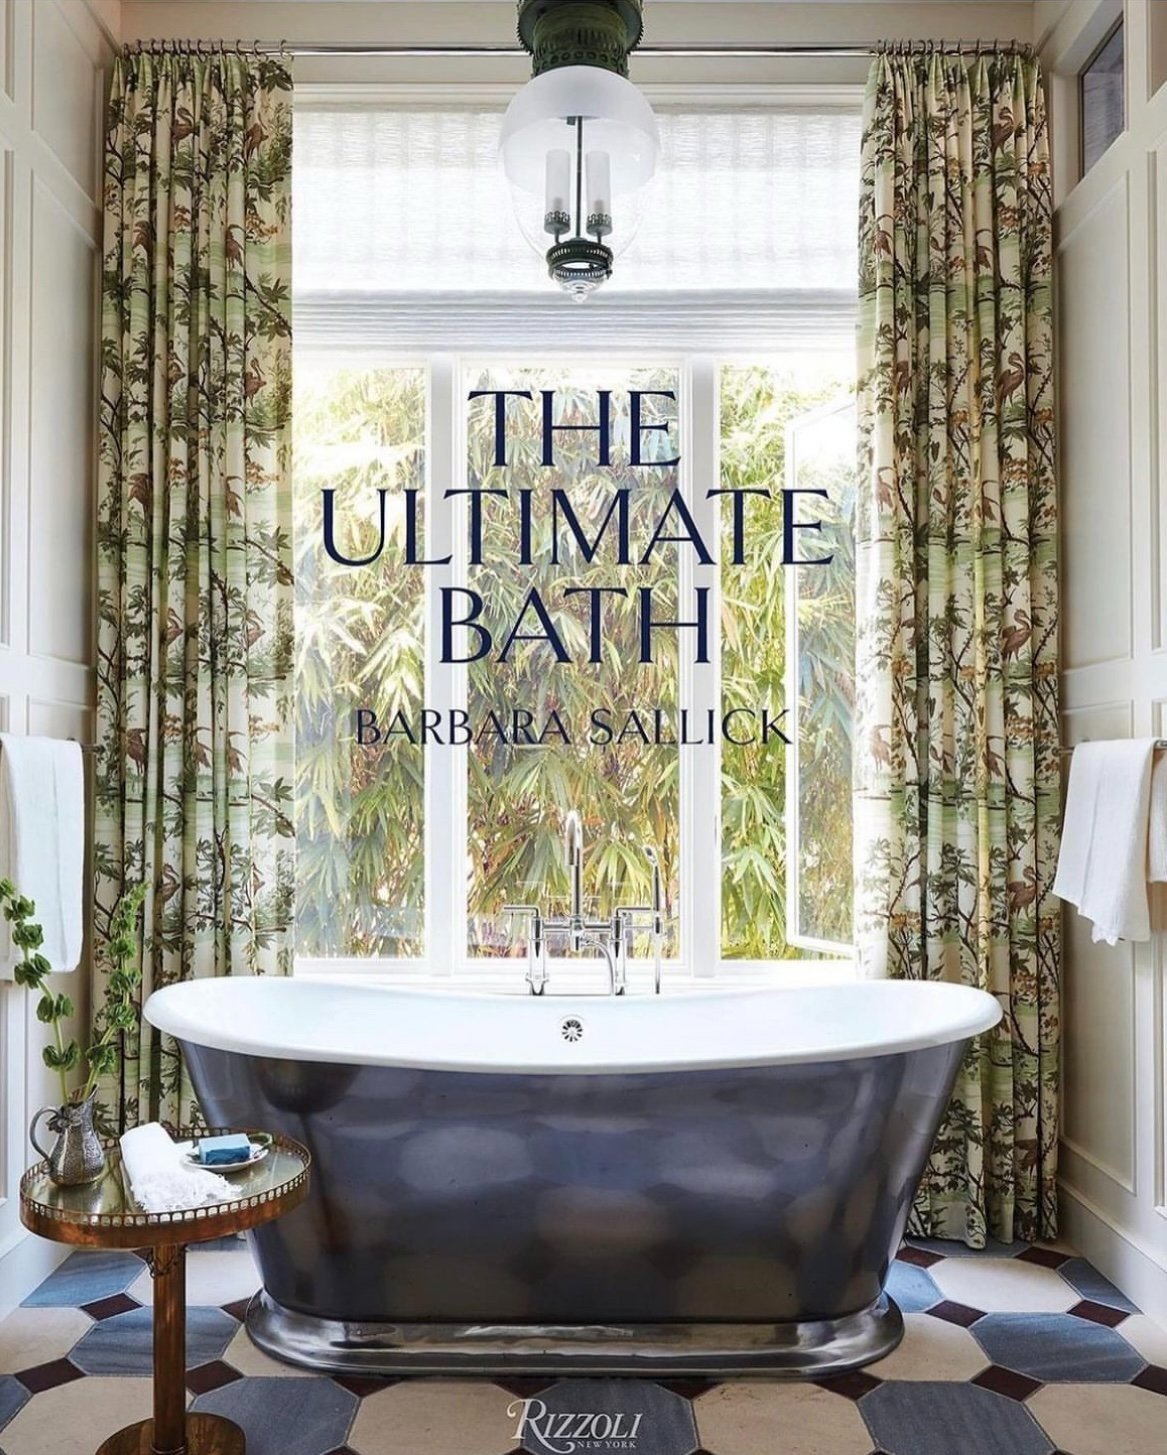 The Ultimate Bath - Rizzoli book by Barbara Sallick (2022)